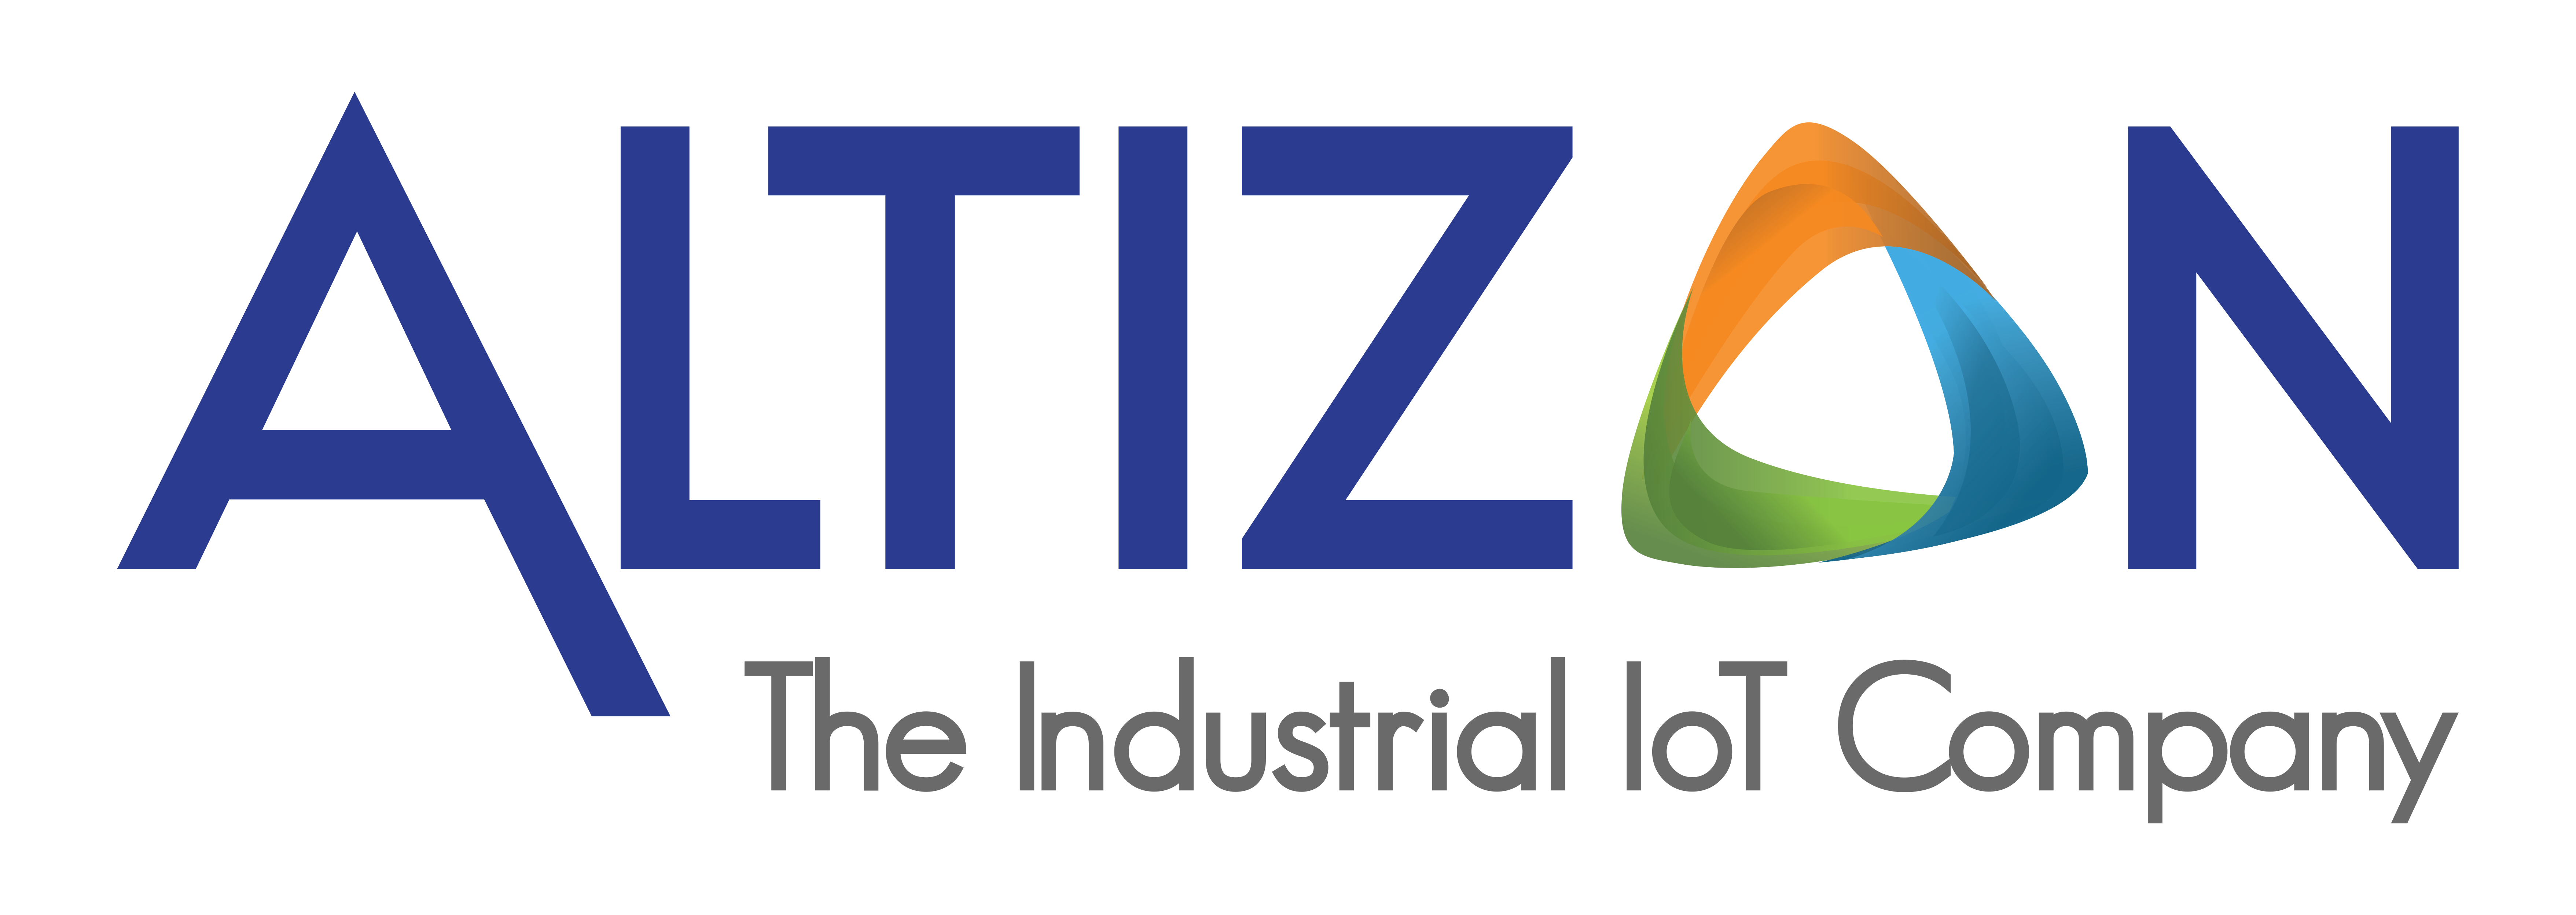 Altizon is a global industrial IoT (IIoT) platform company empowering industrial digital revolutions for enterprises.